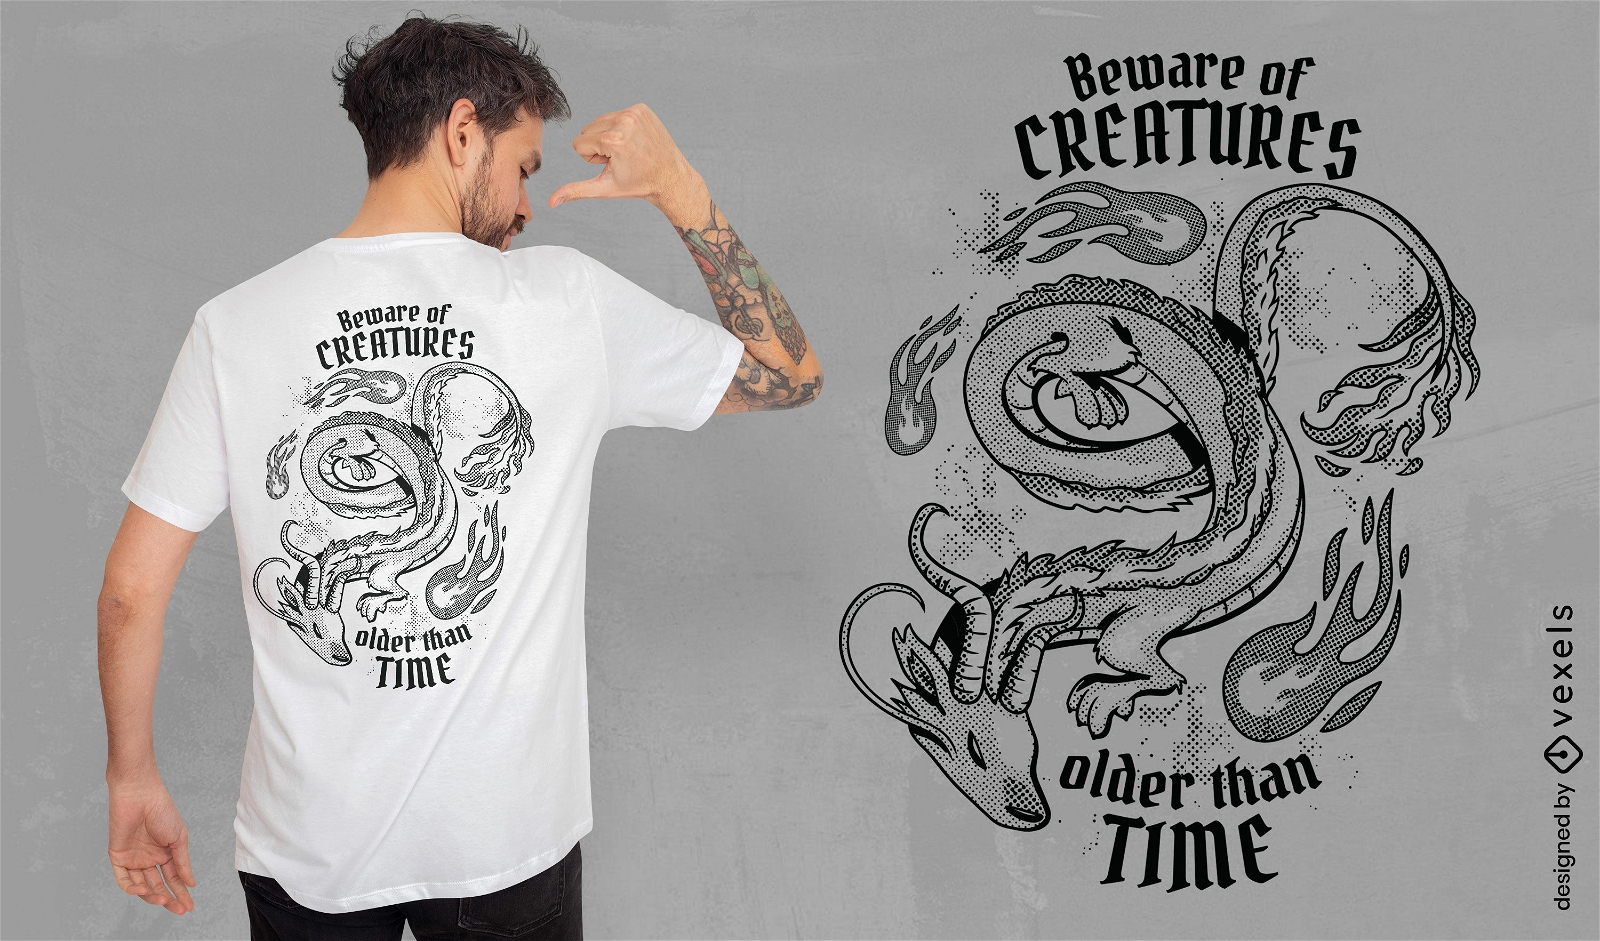 Dragon and flames monochrome t-shirt design